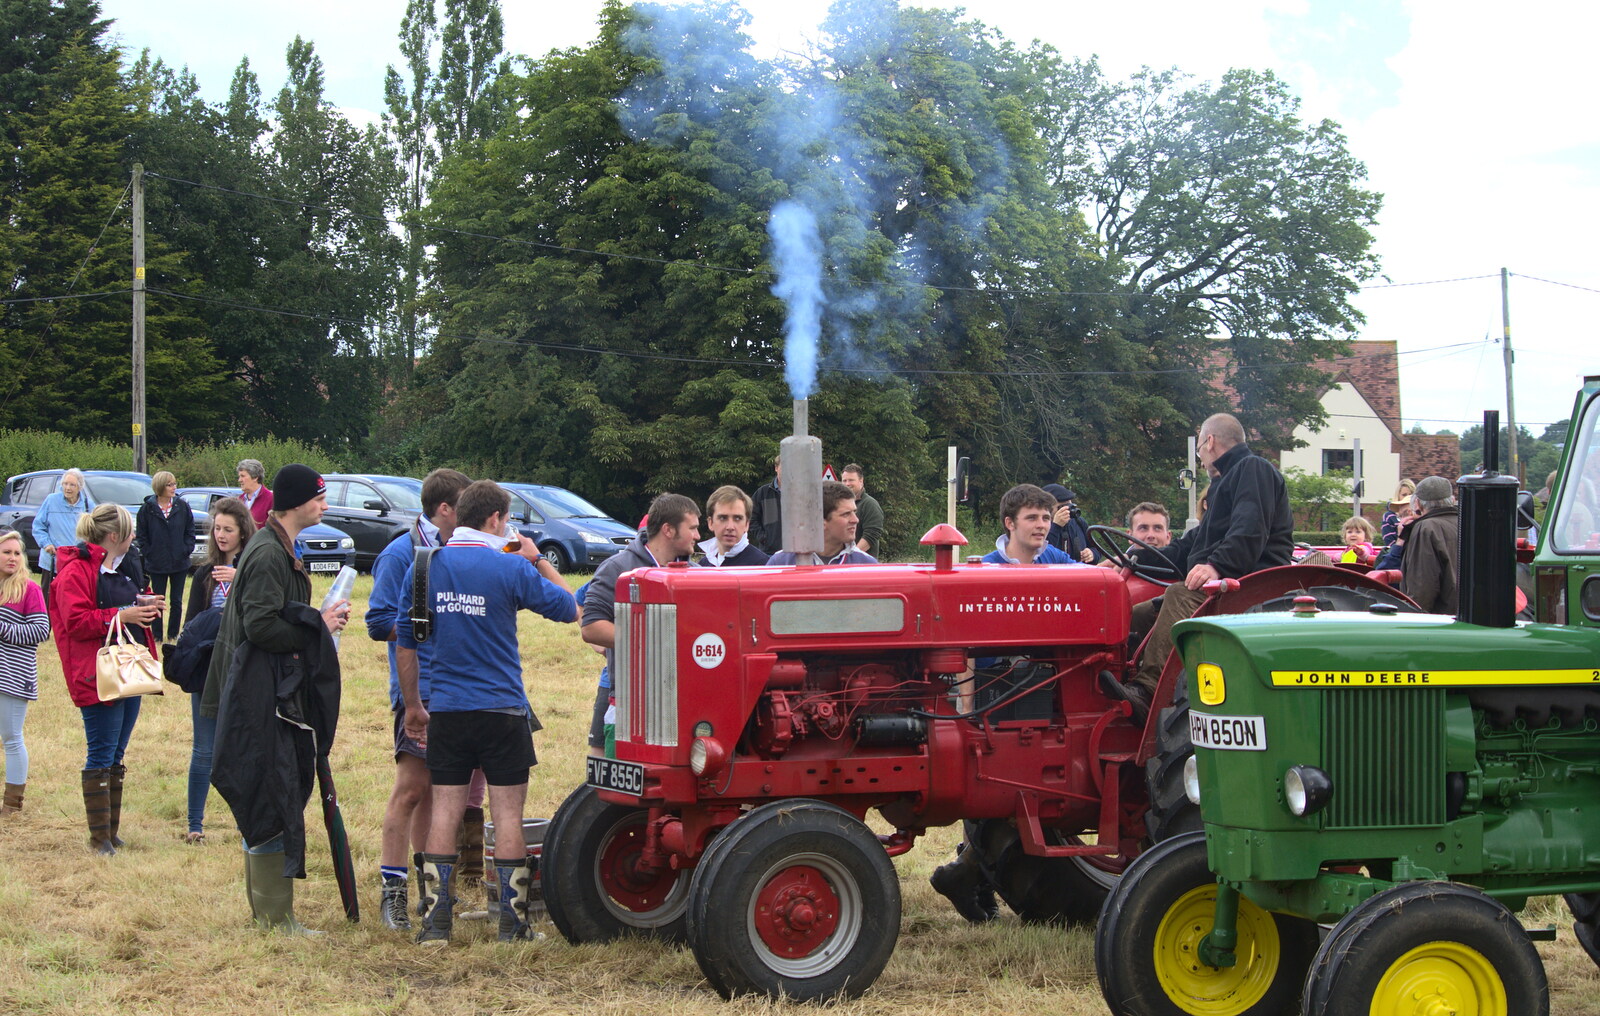 A McCormack International fires up from Thrandeston Pig, Little Green, Thrandeston, Suffolk - 29th June 2014